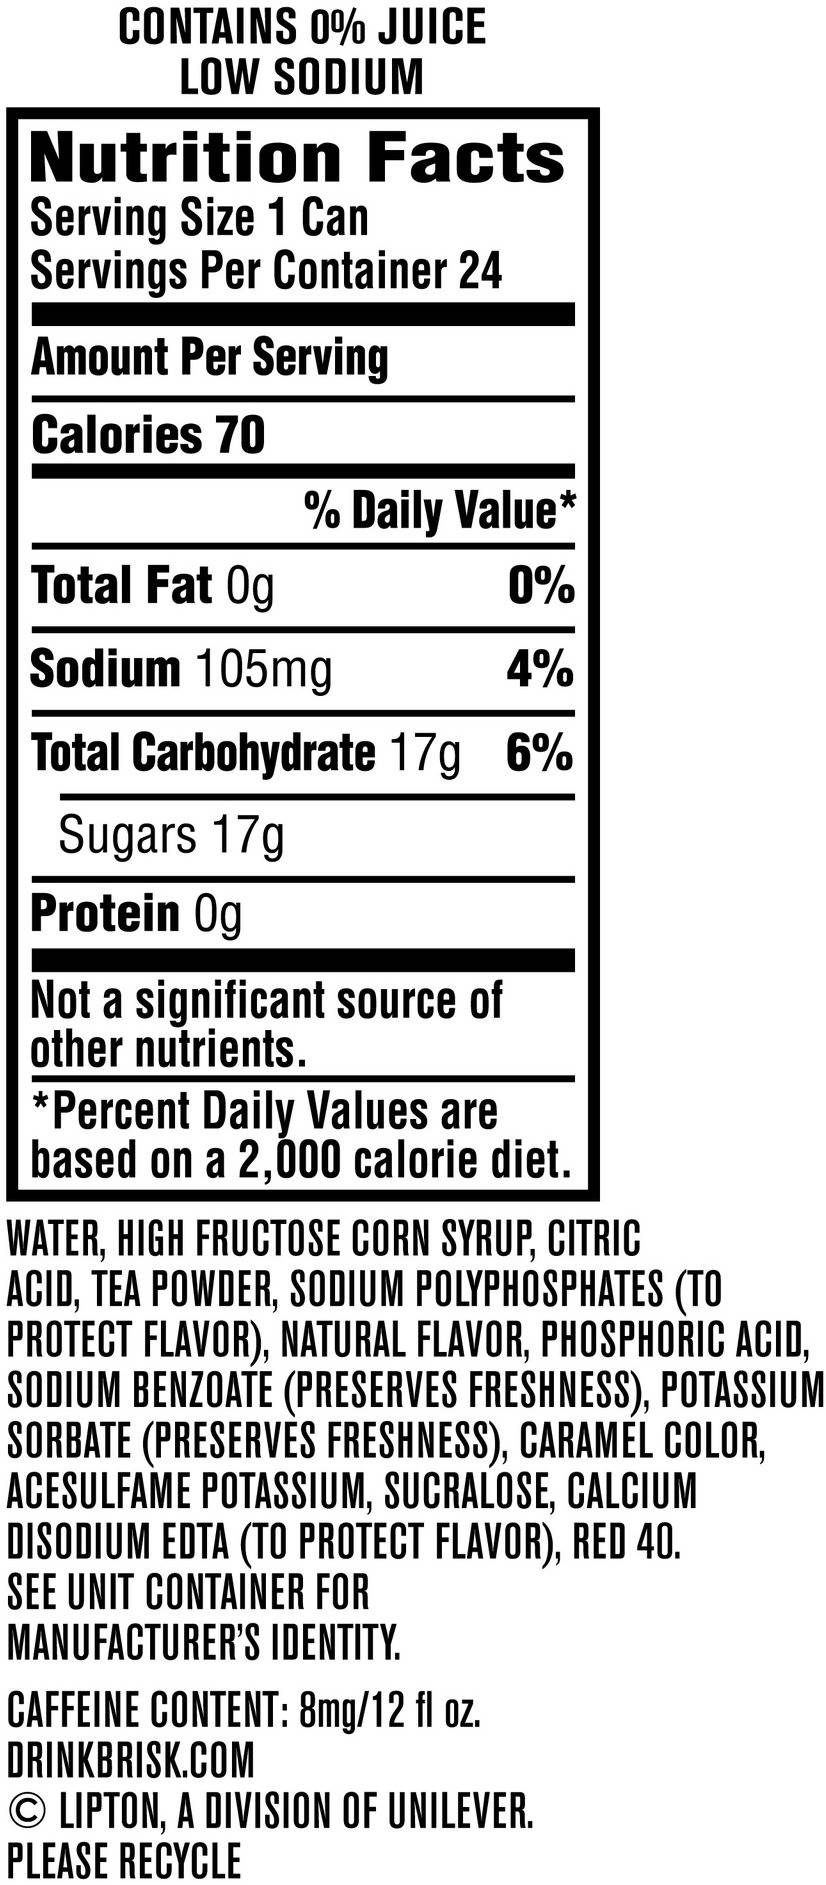 Image describing nutrition information for product Brisk Lemonade